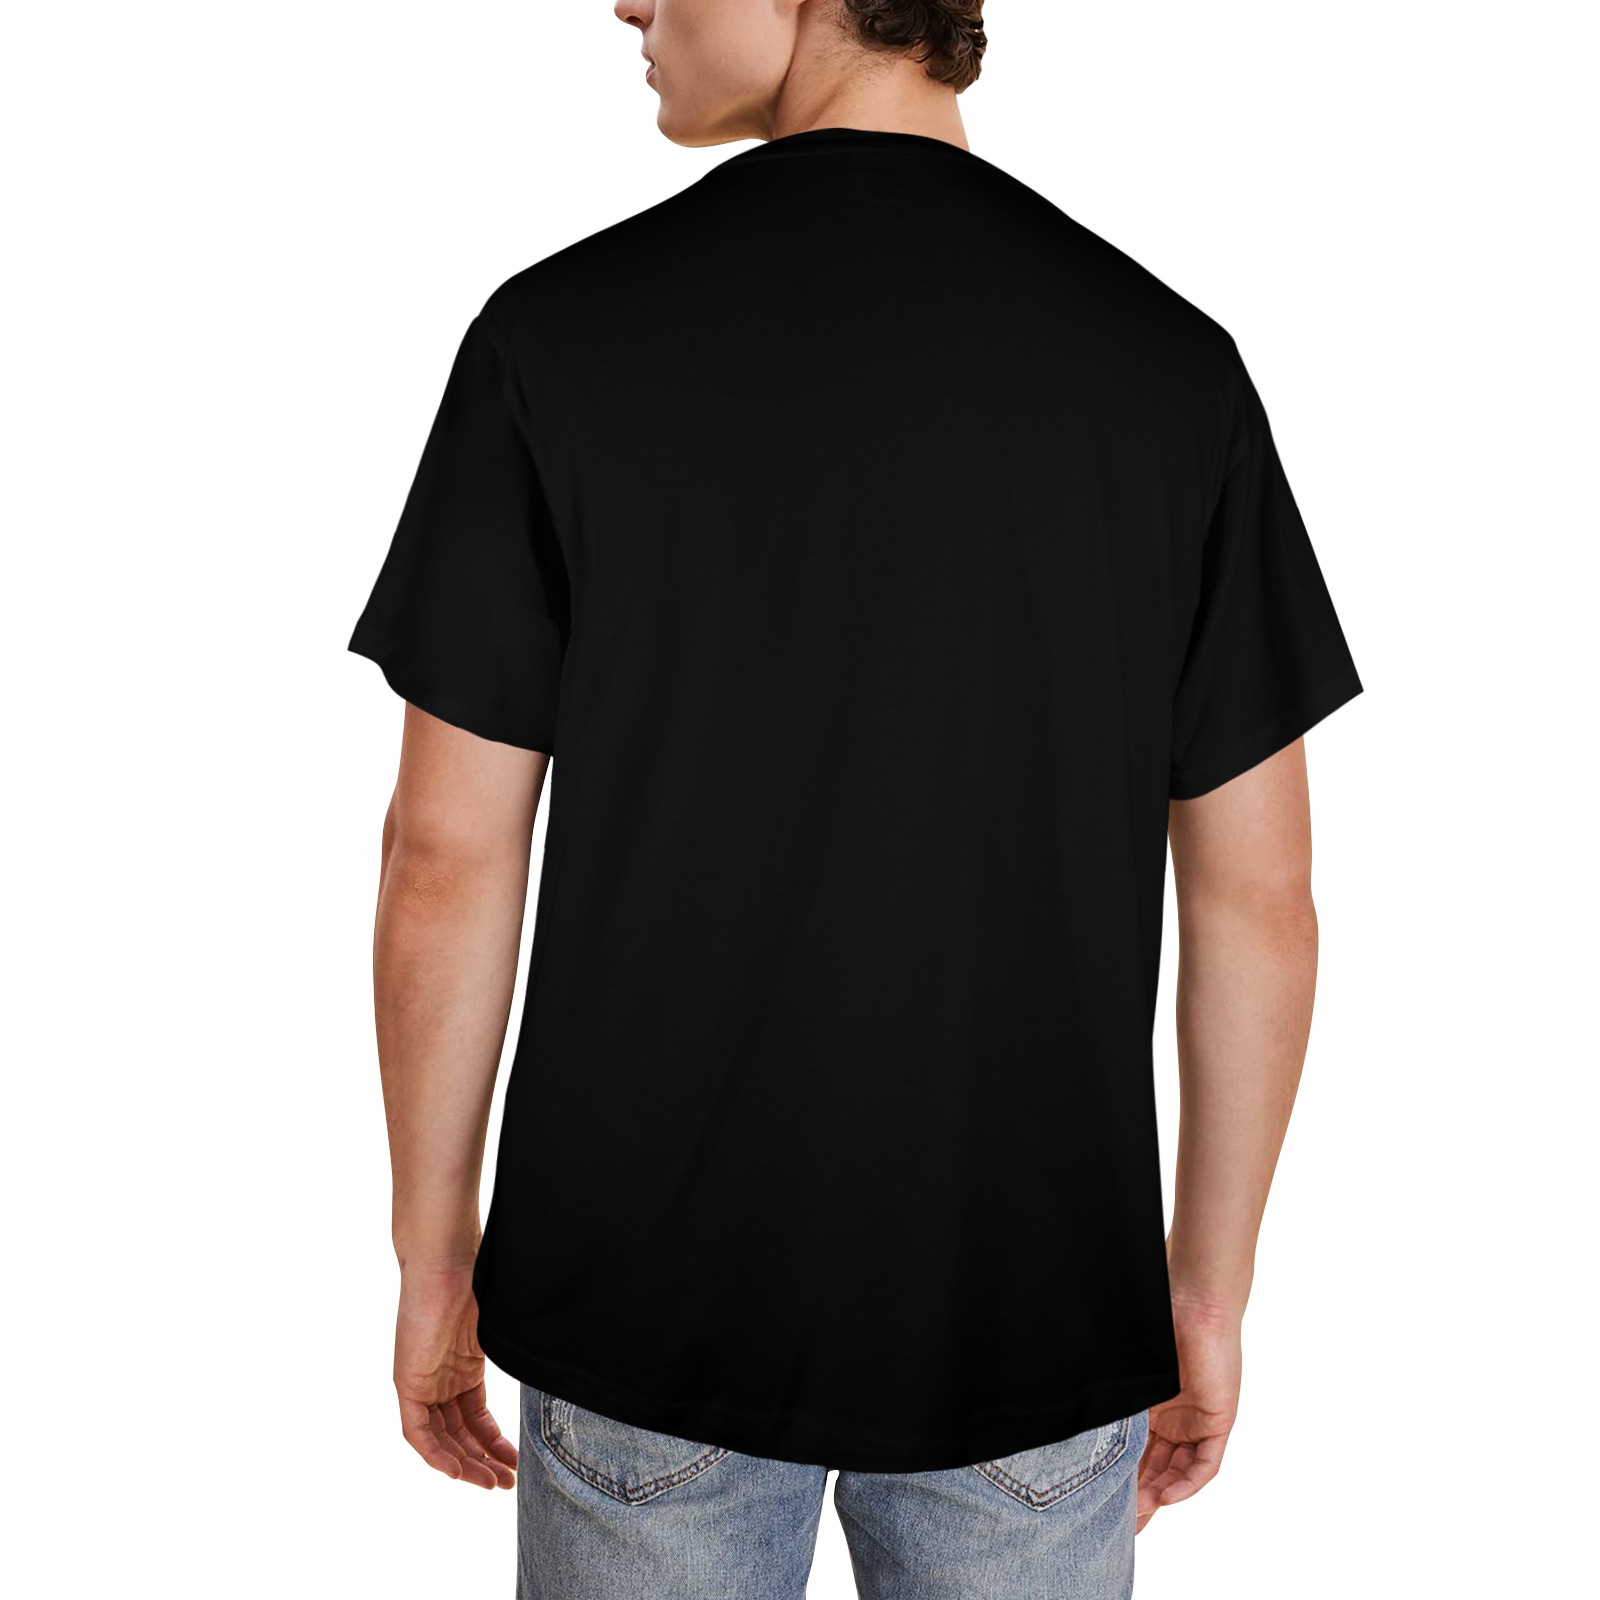 Men's Glow in the Dark T-shirt (Front Printing)